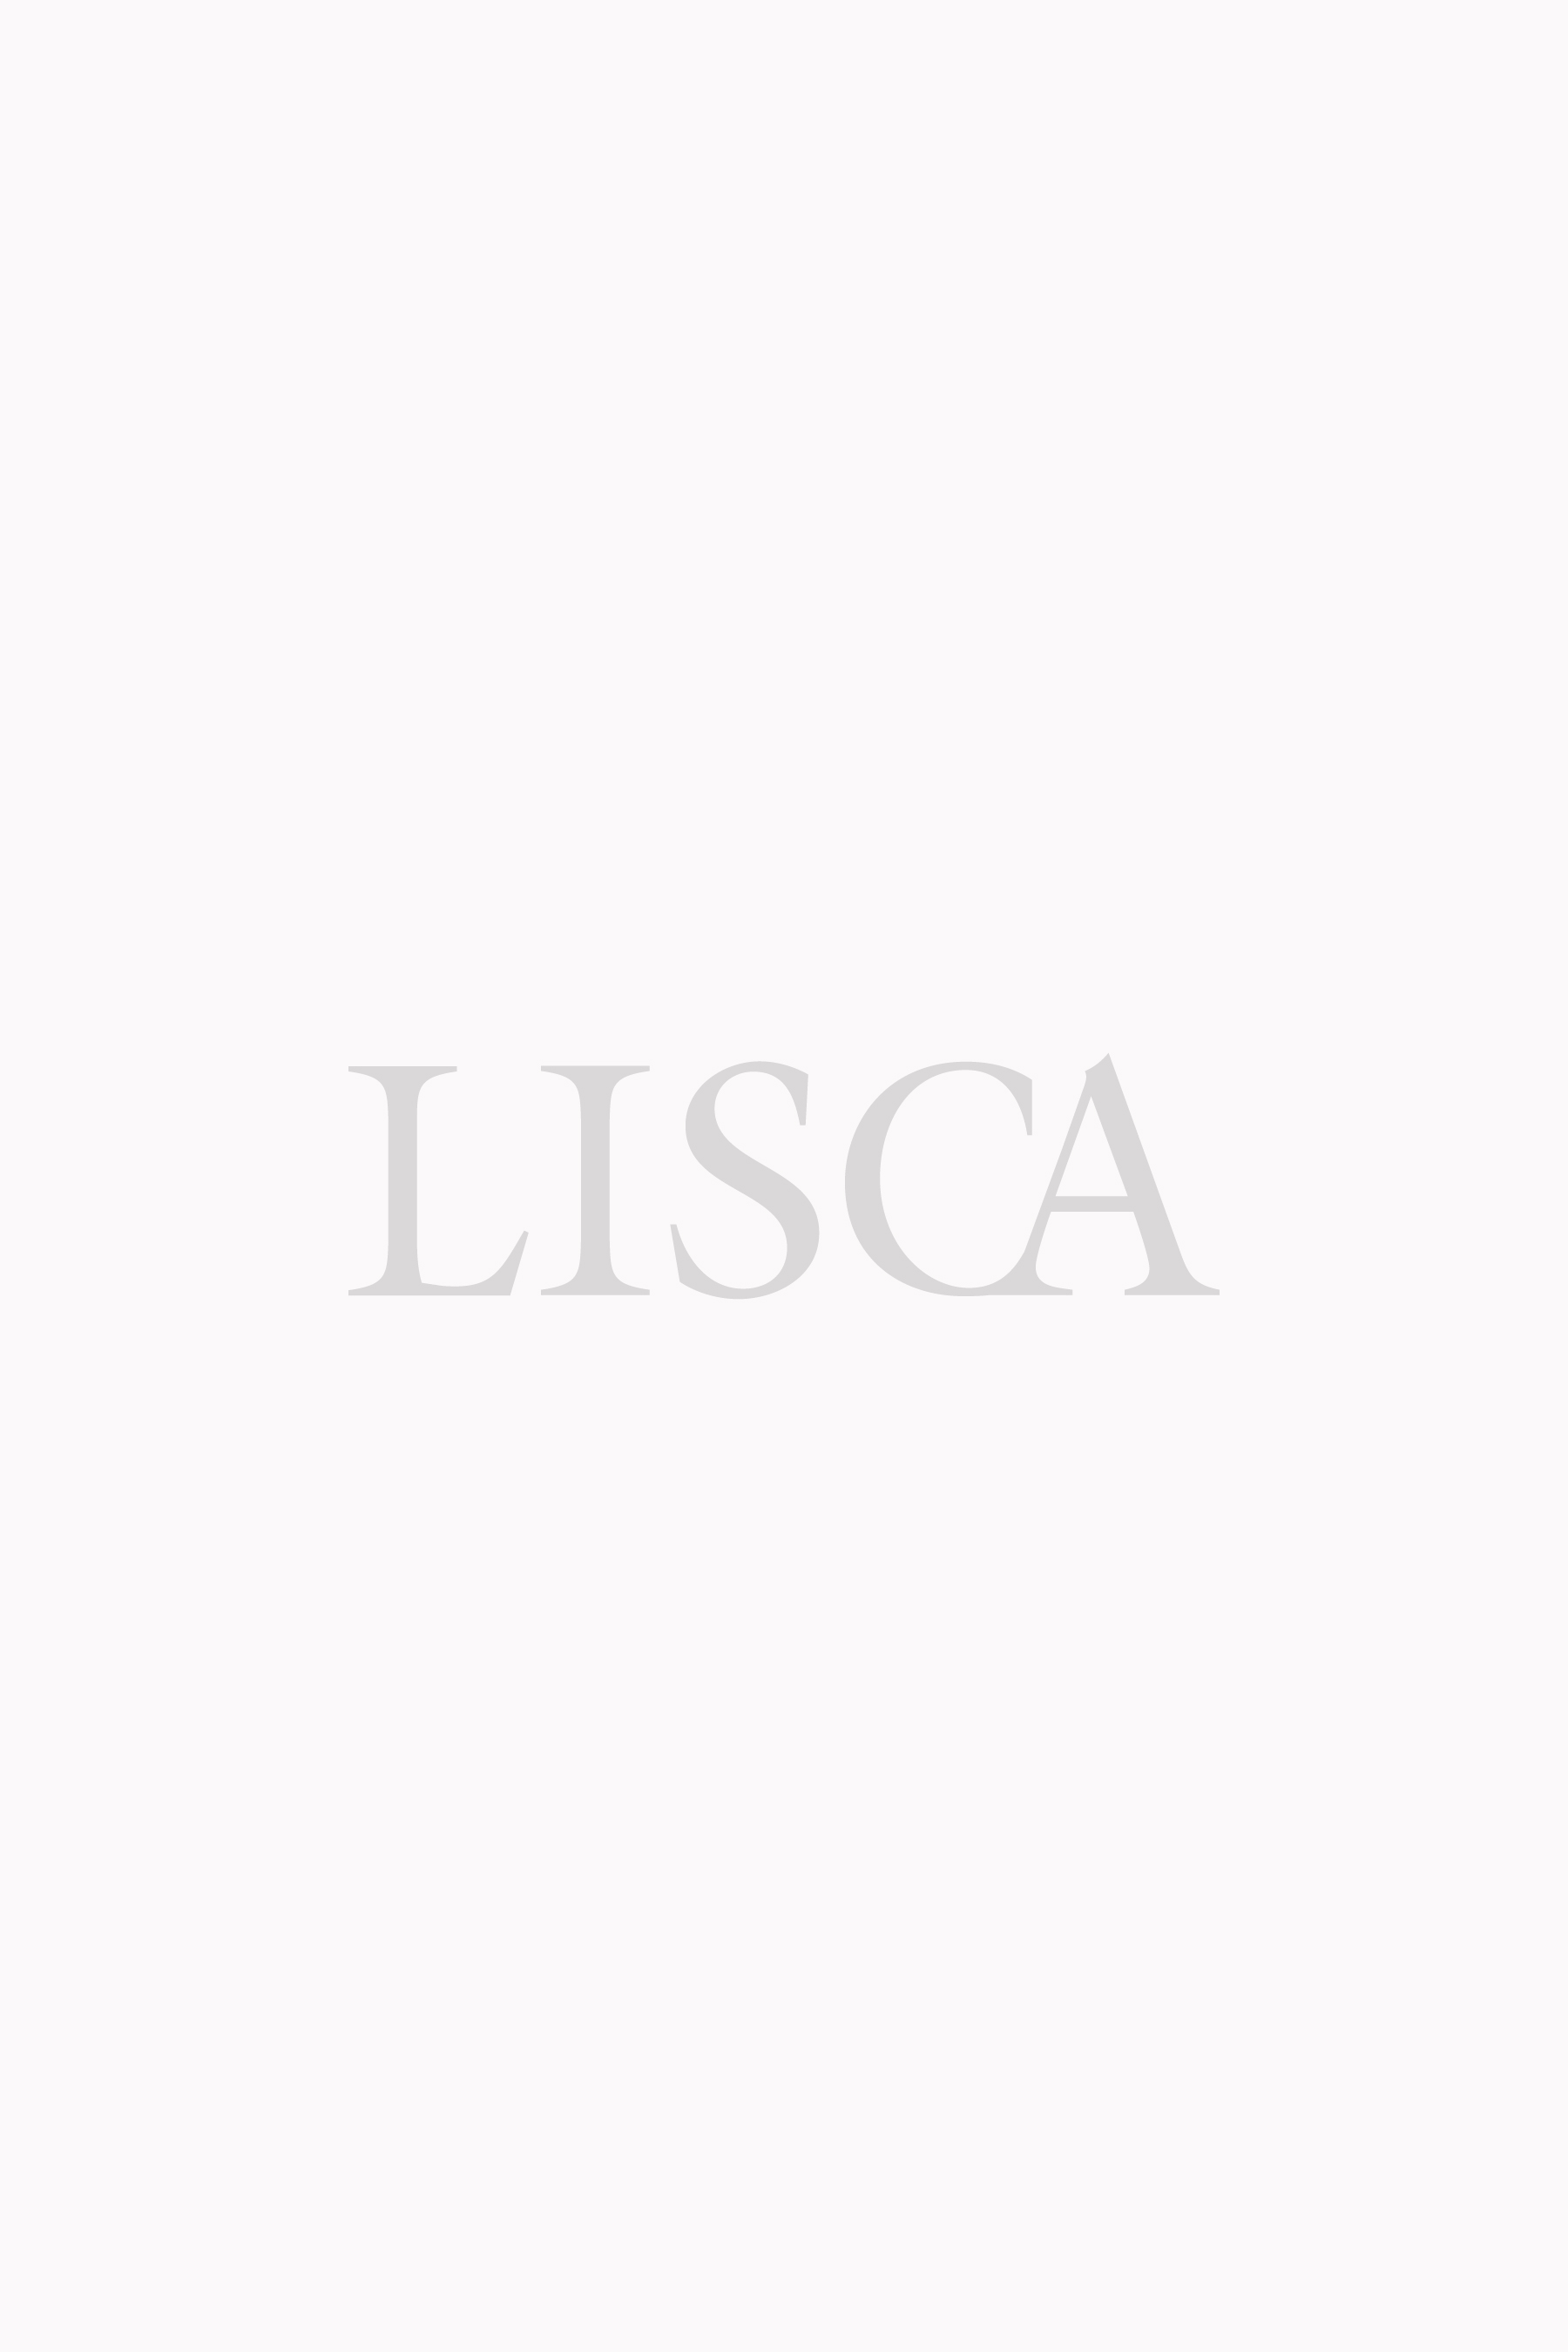 Lingerie Lisca Fashion